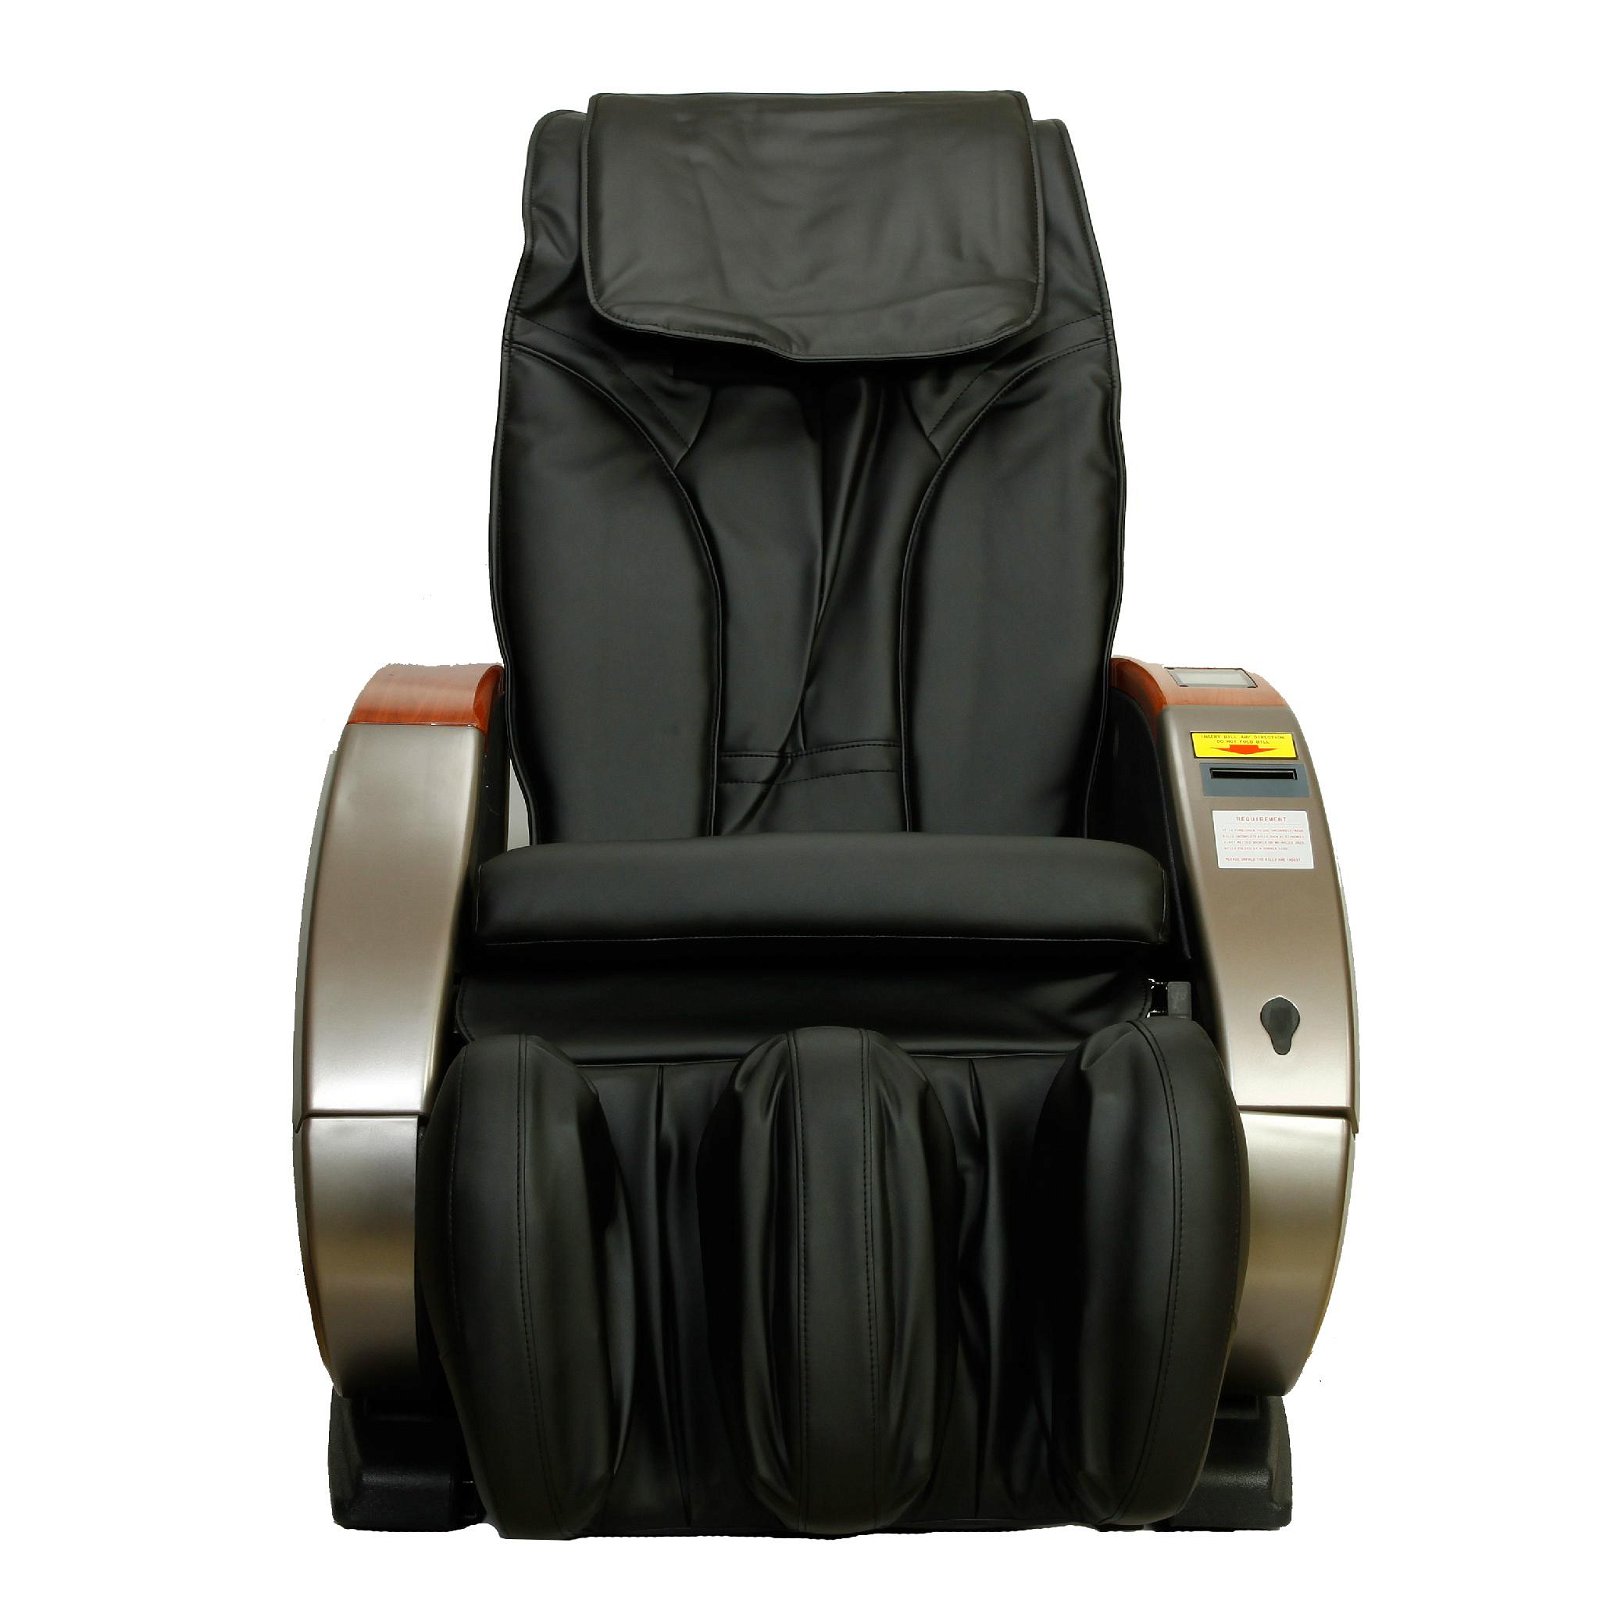 Shopping Mall Bill Operated Massage Chair RT-M02 3